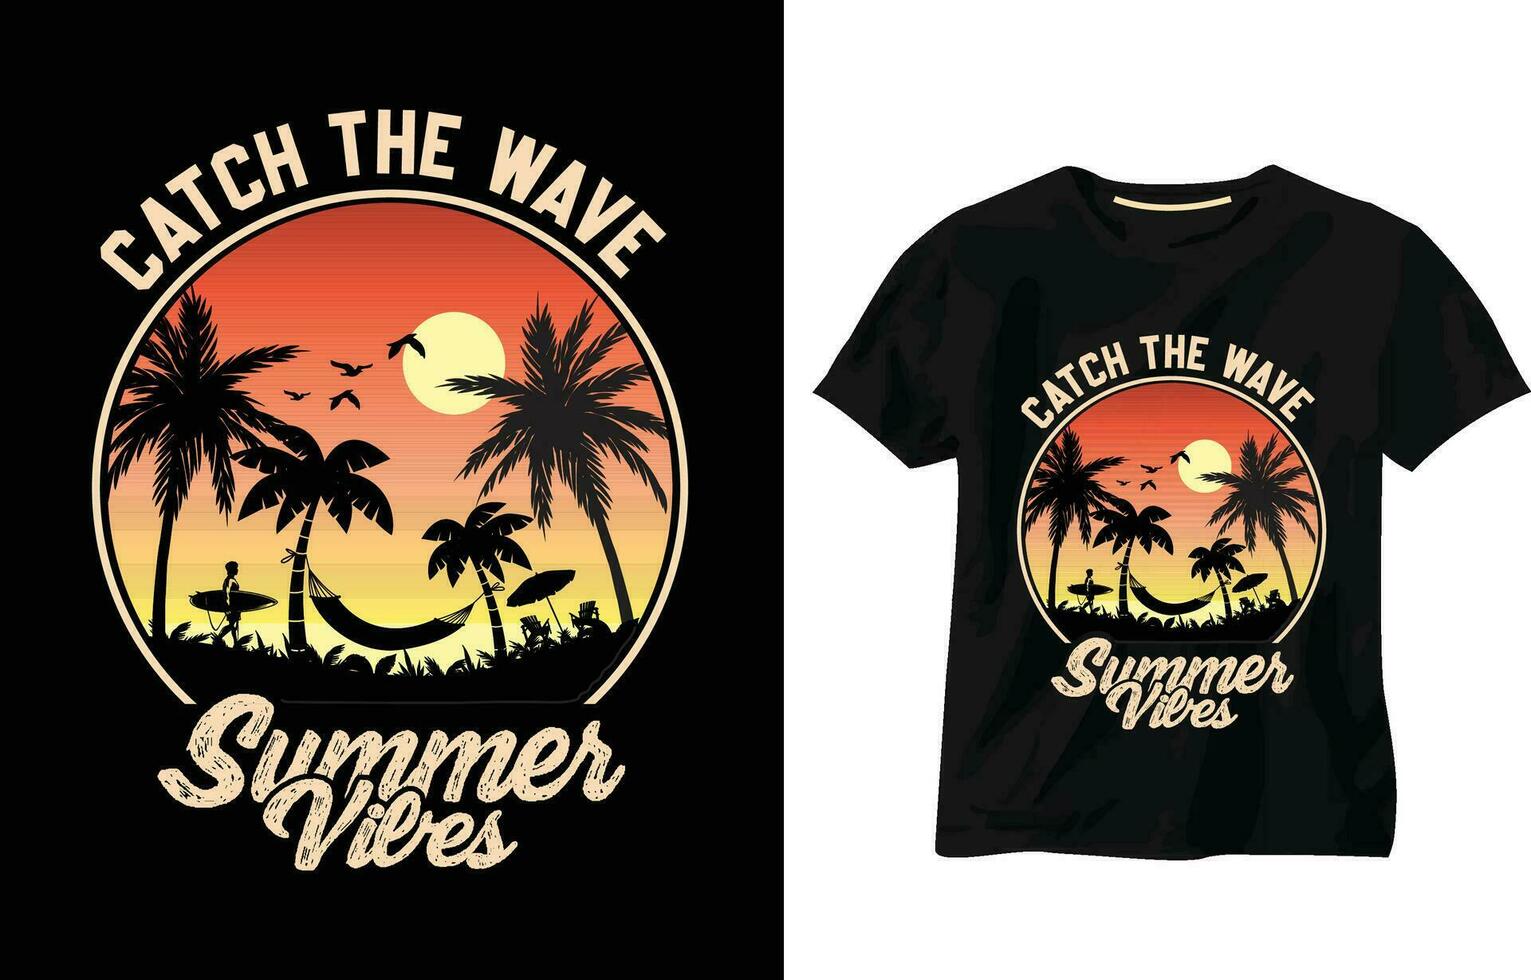 Fang das Welle Sommer- Stimmung T-Shirt Design Vektor zum drucken, Sommer- T-Shirt Design, Typografie T-Shirt Design, brechen das Wellen, Meer Strand T-Shirt Design